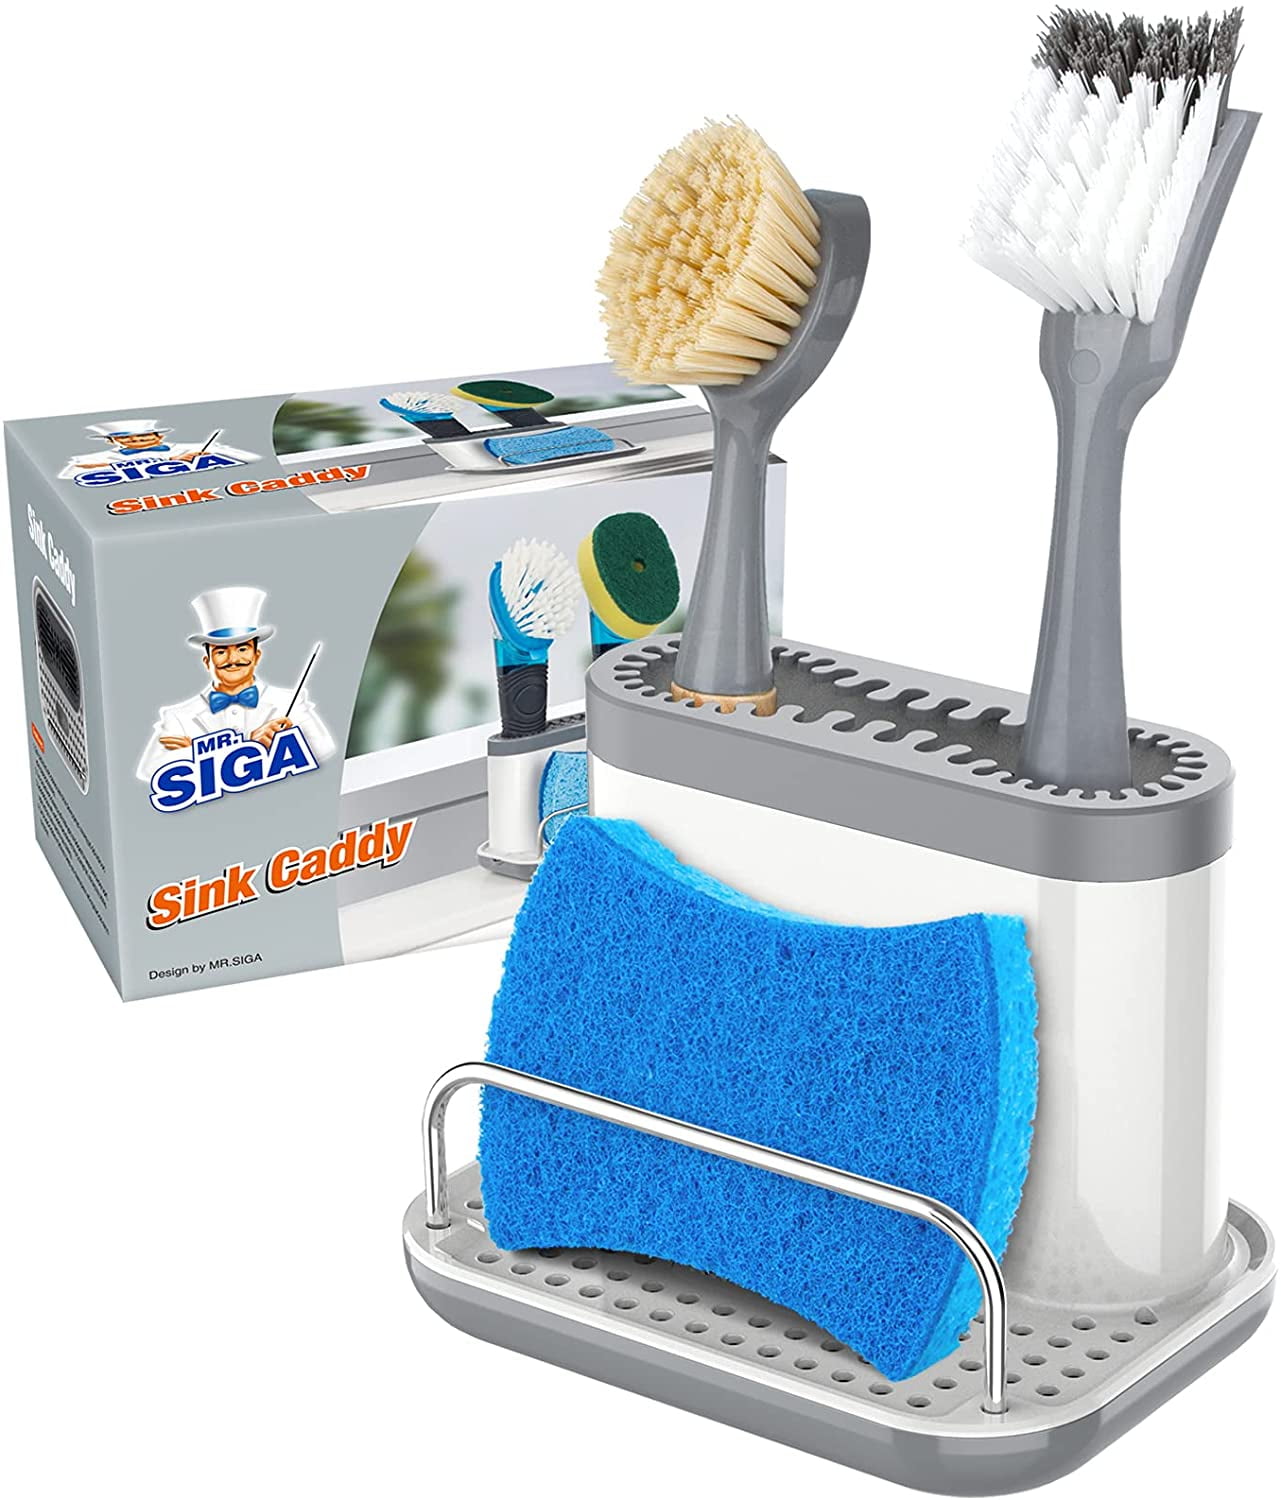 MR.Siga Sink Caddy, Kitchen Sponge Brush Holder, Sink Organizer with Drip  Tray, White & Gray 